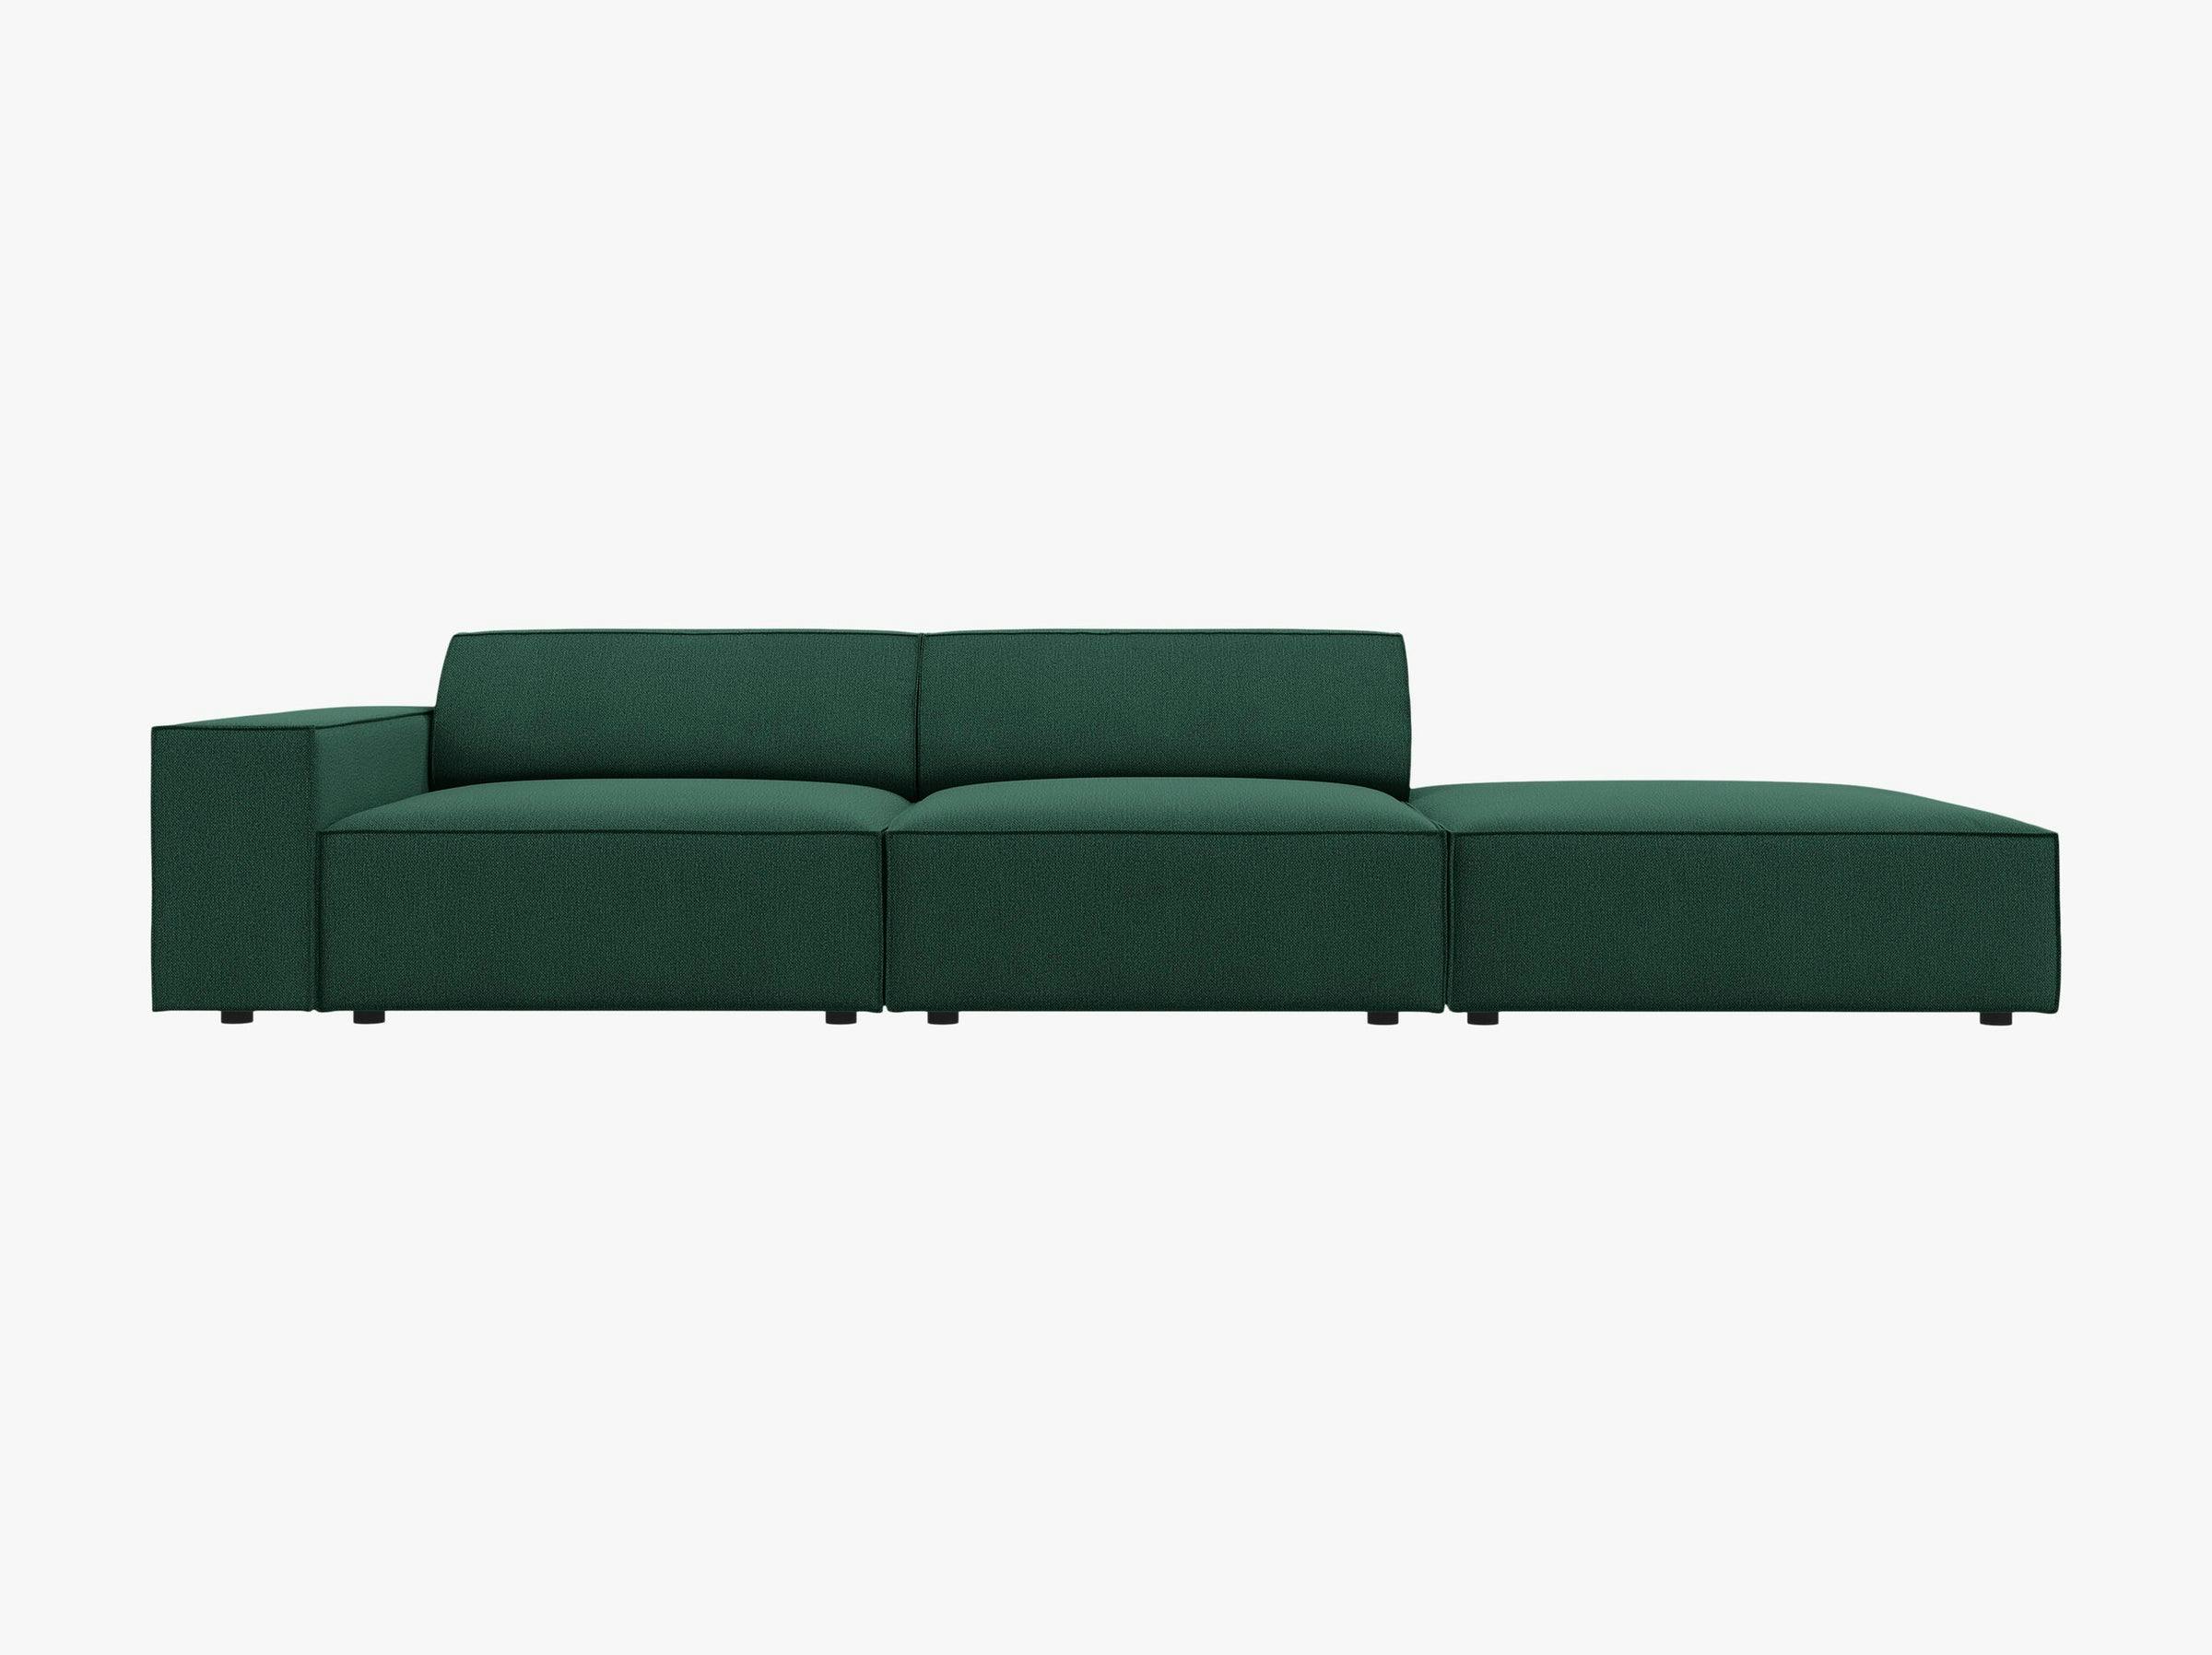 Jodie sofás tessuto strutturato verde